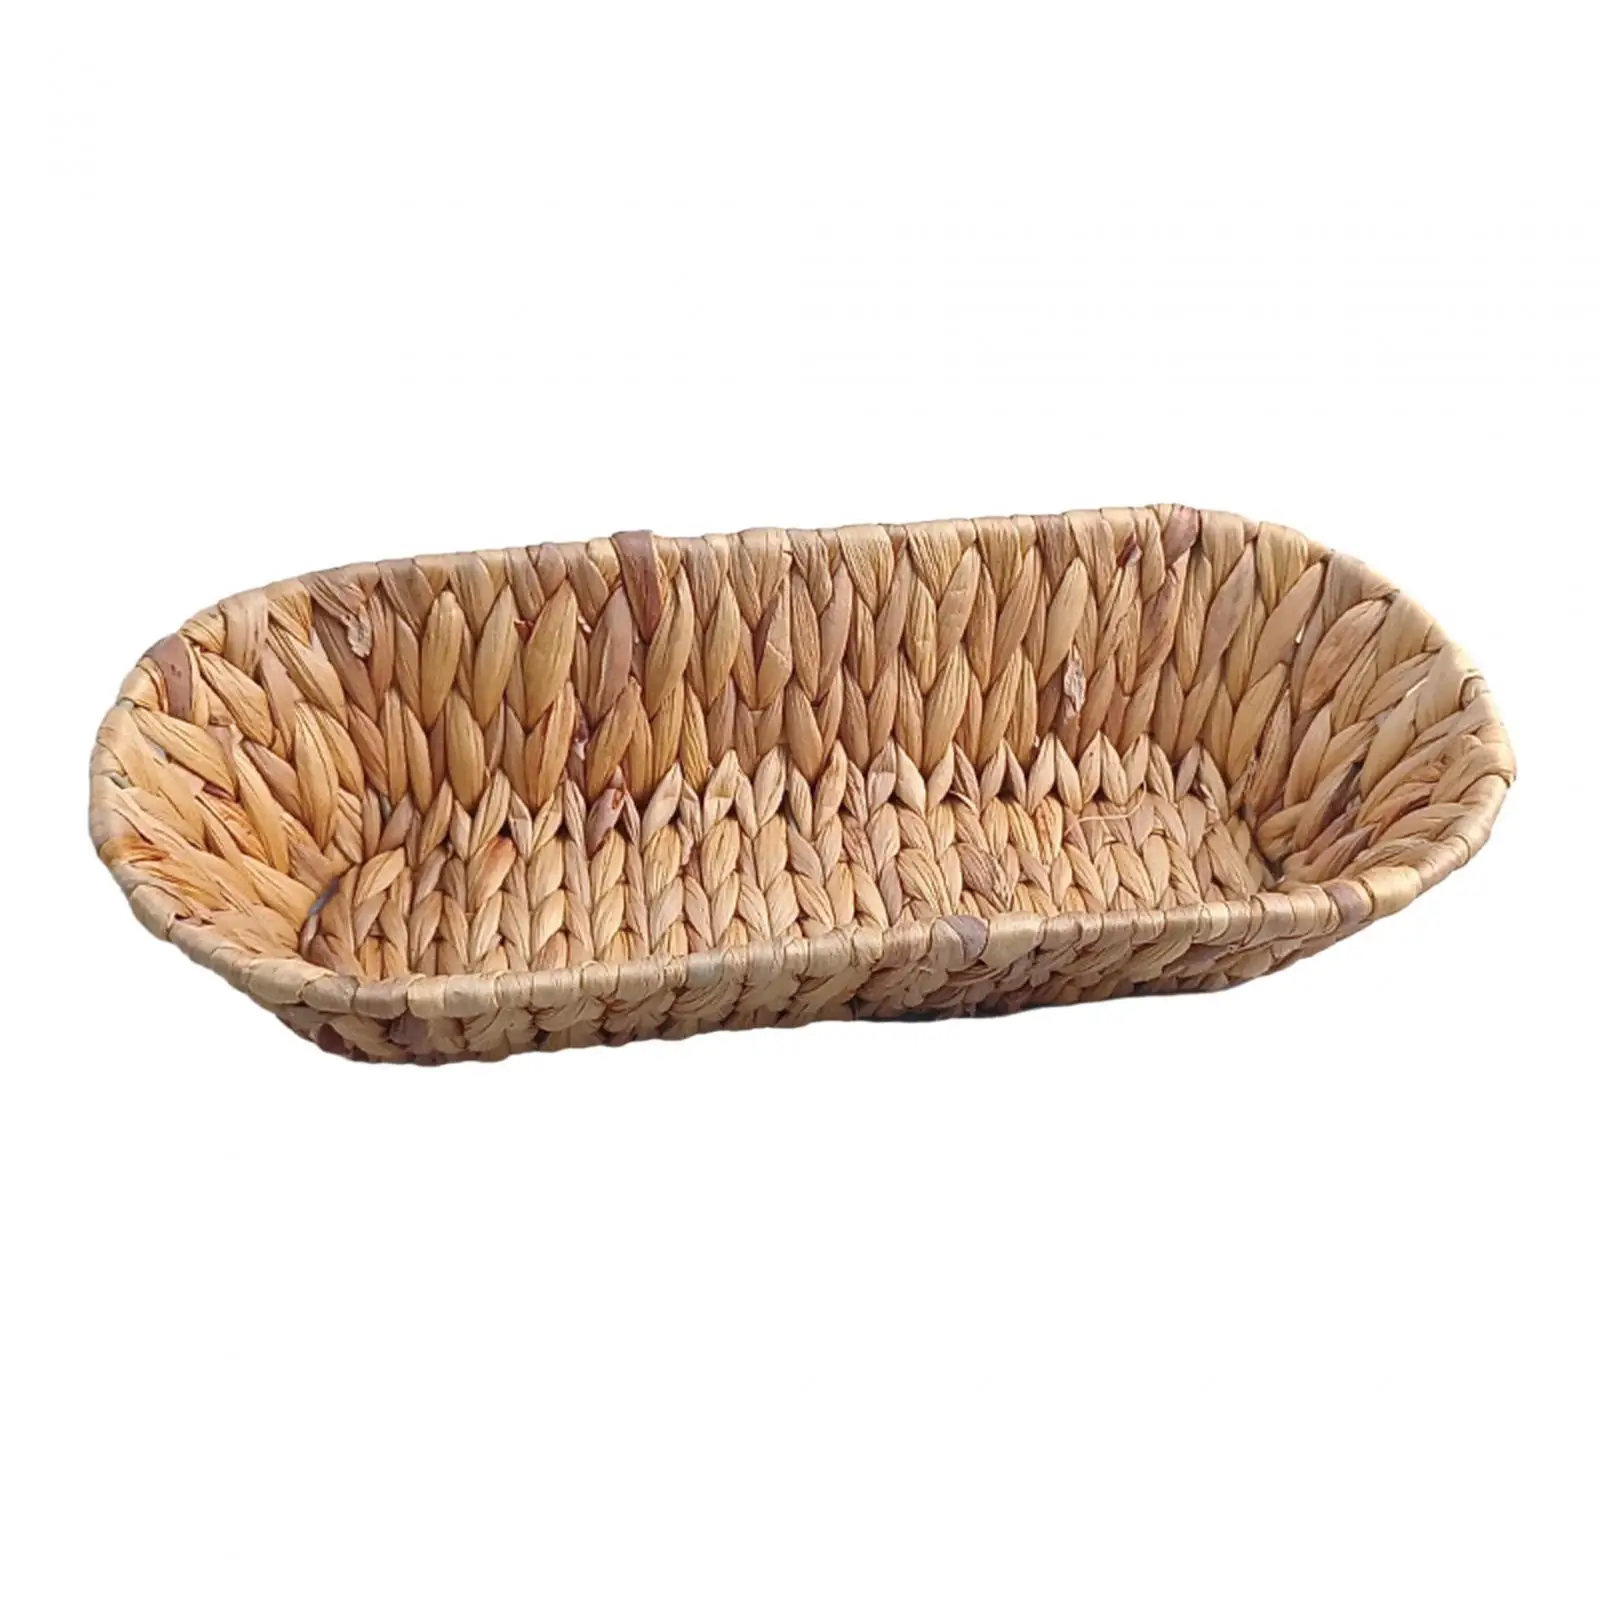 Handwoven Grass Rattan Bread Basket Serving Organizer Multipurpose Pastoral Style 32x13x7cm for Keys Wallet Phone Durable